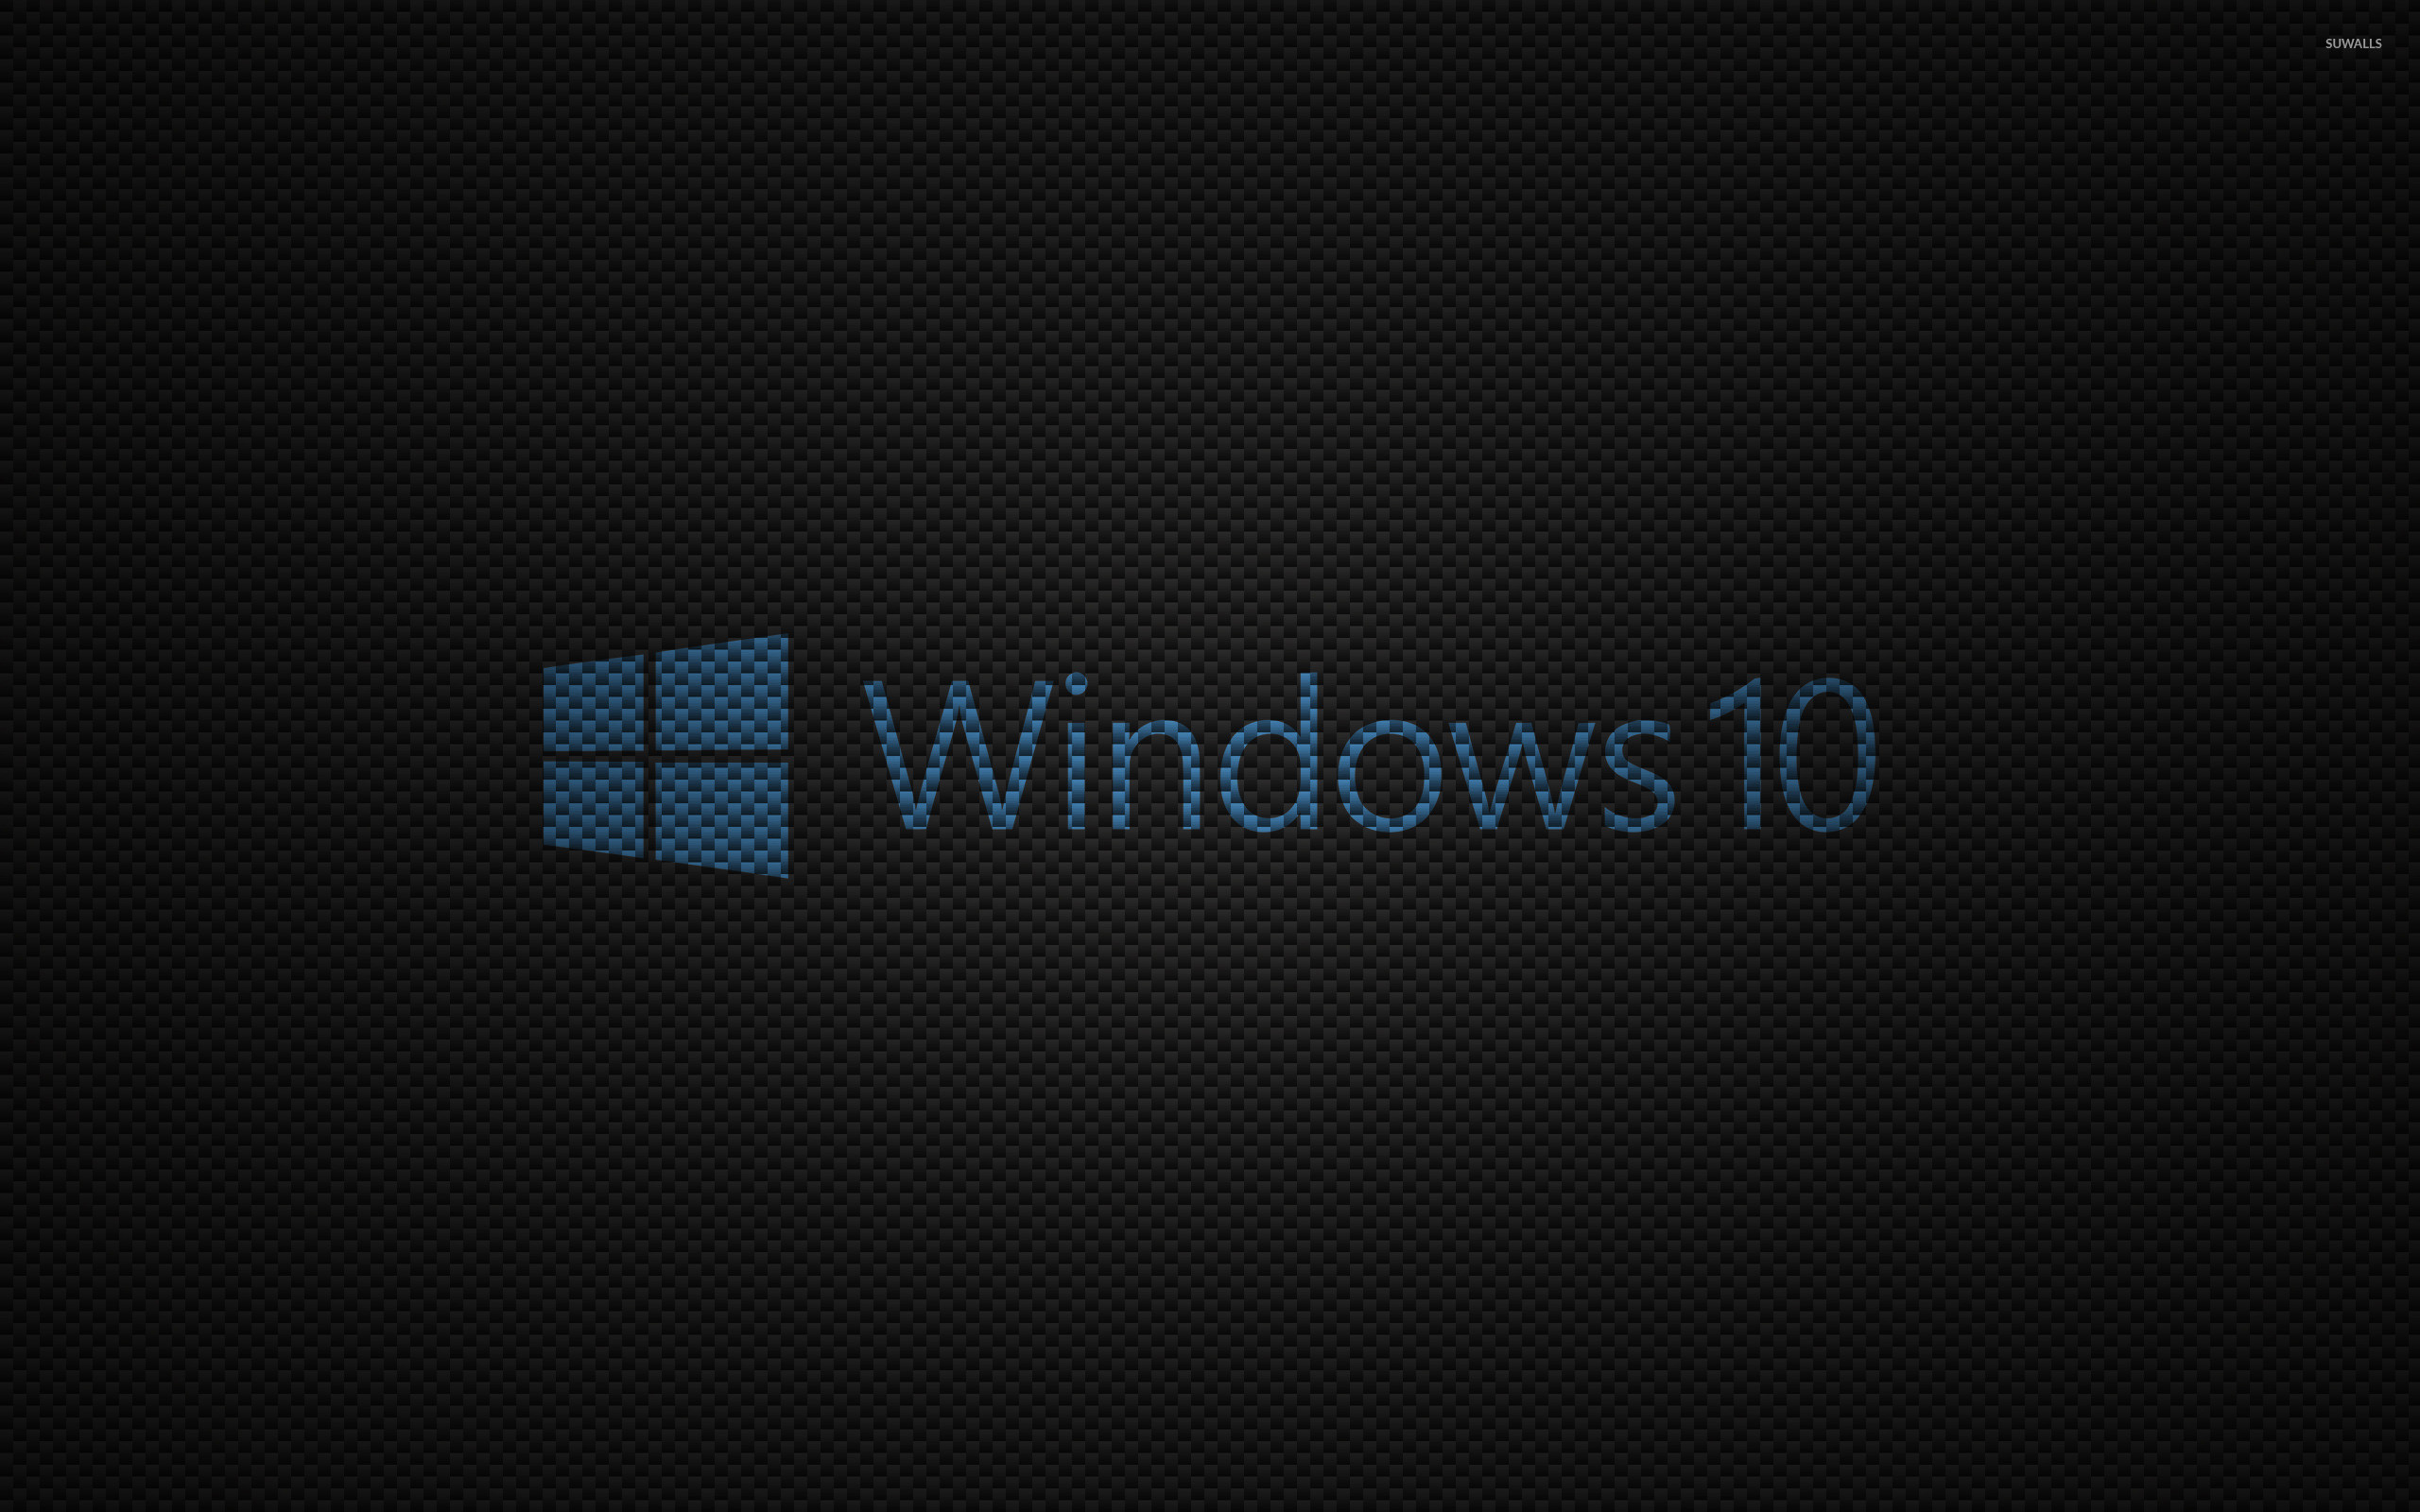 2560x1600 Windows 10 text logo on carbon fiber wallpaper.